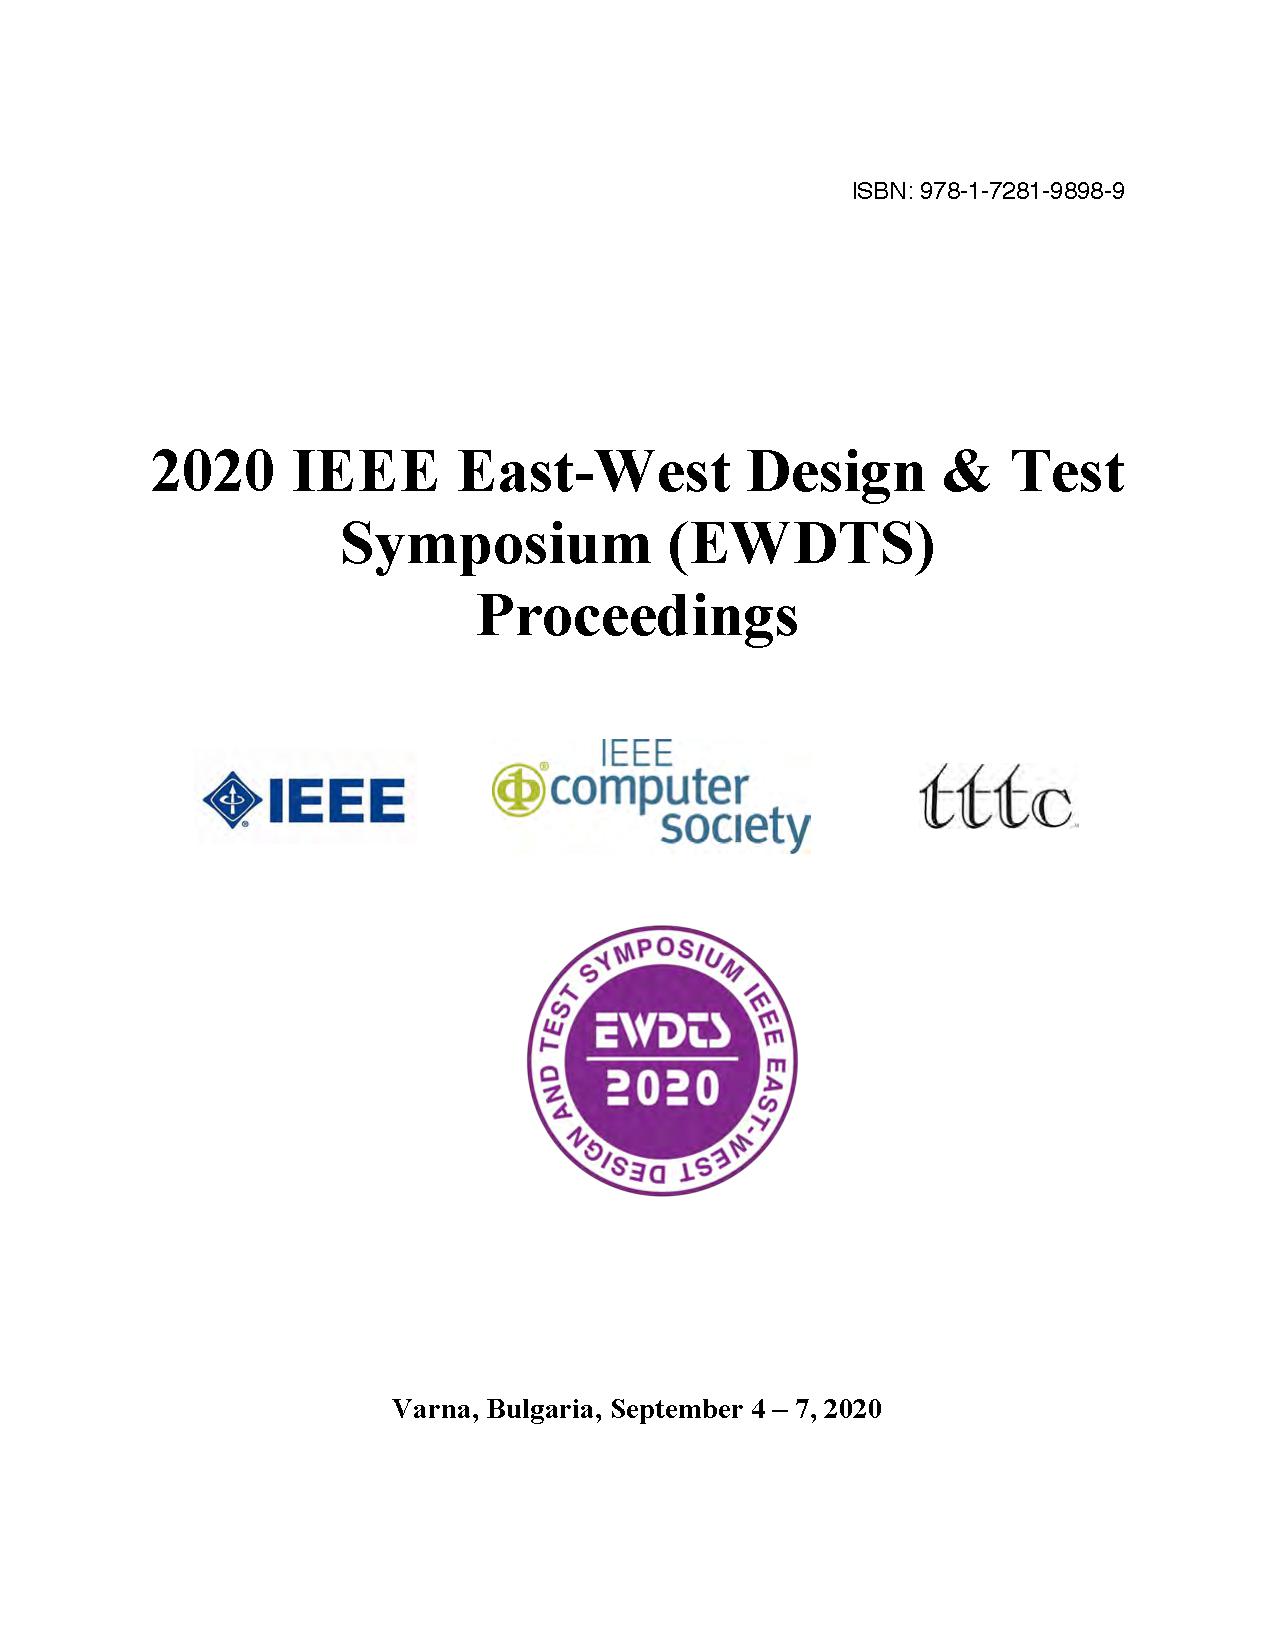 Proceedings 2020 IEEE East-West Design & Test Symposium (EWDTS)